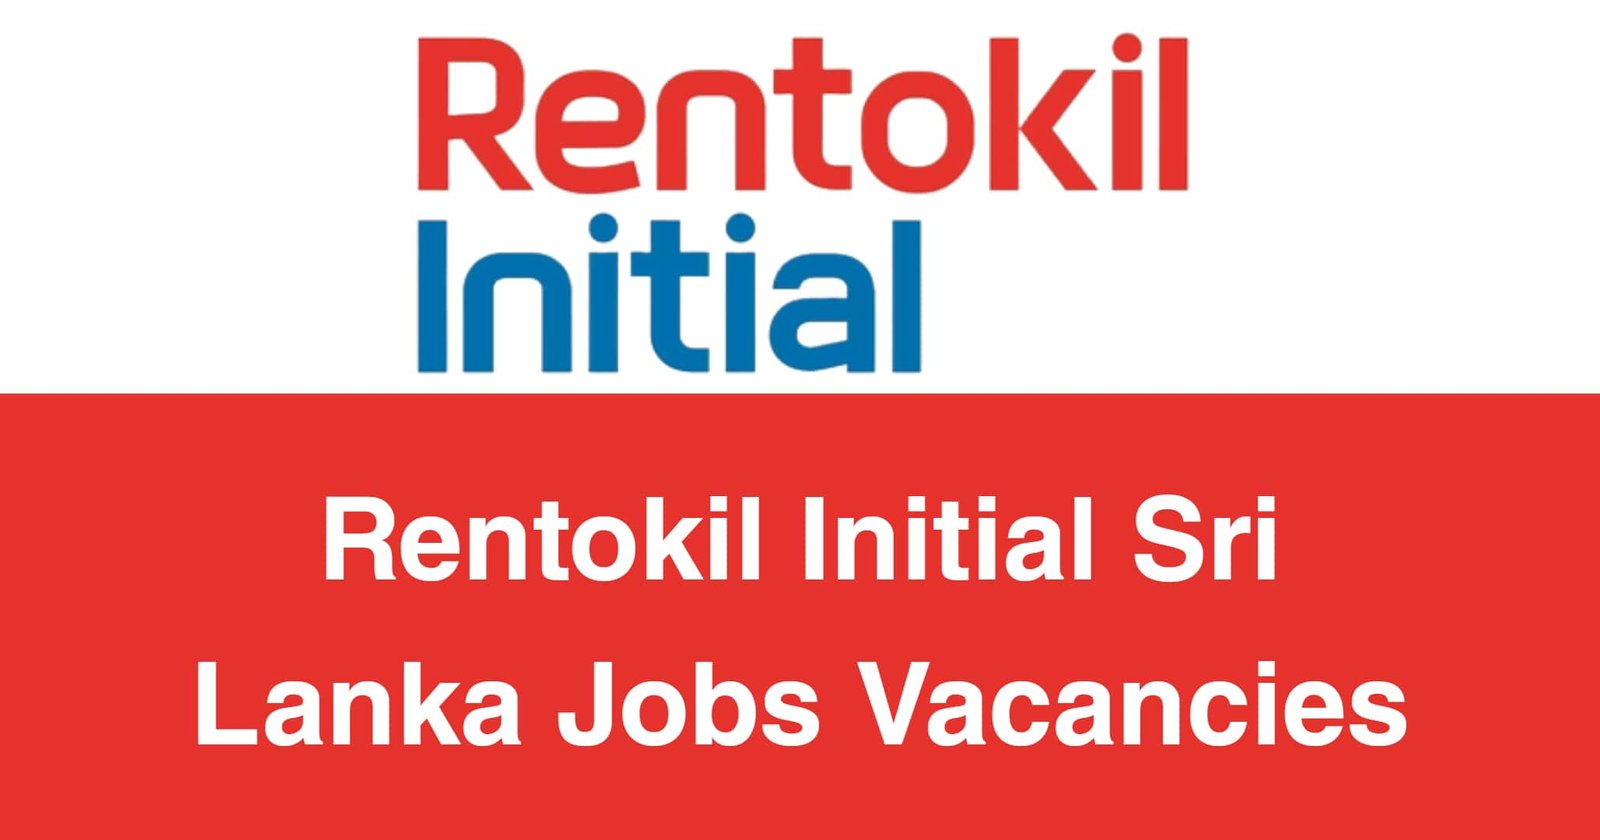 Rentokil Initial Sri Lanka Jobs Vacancies